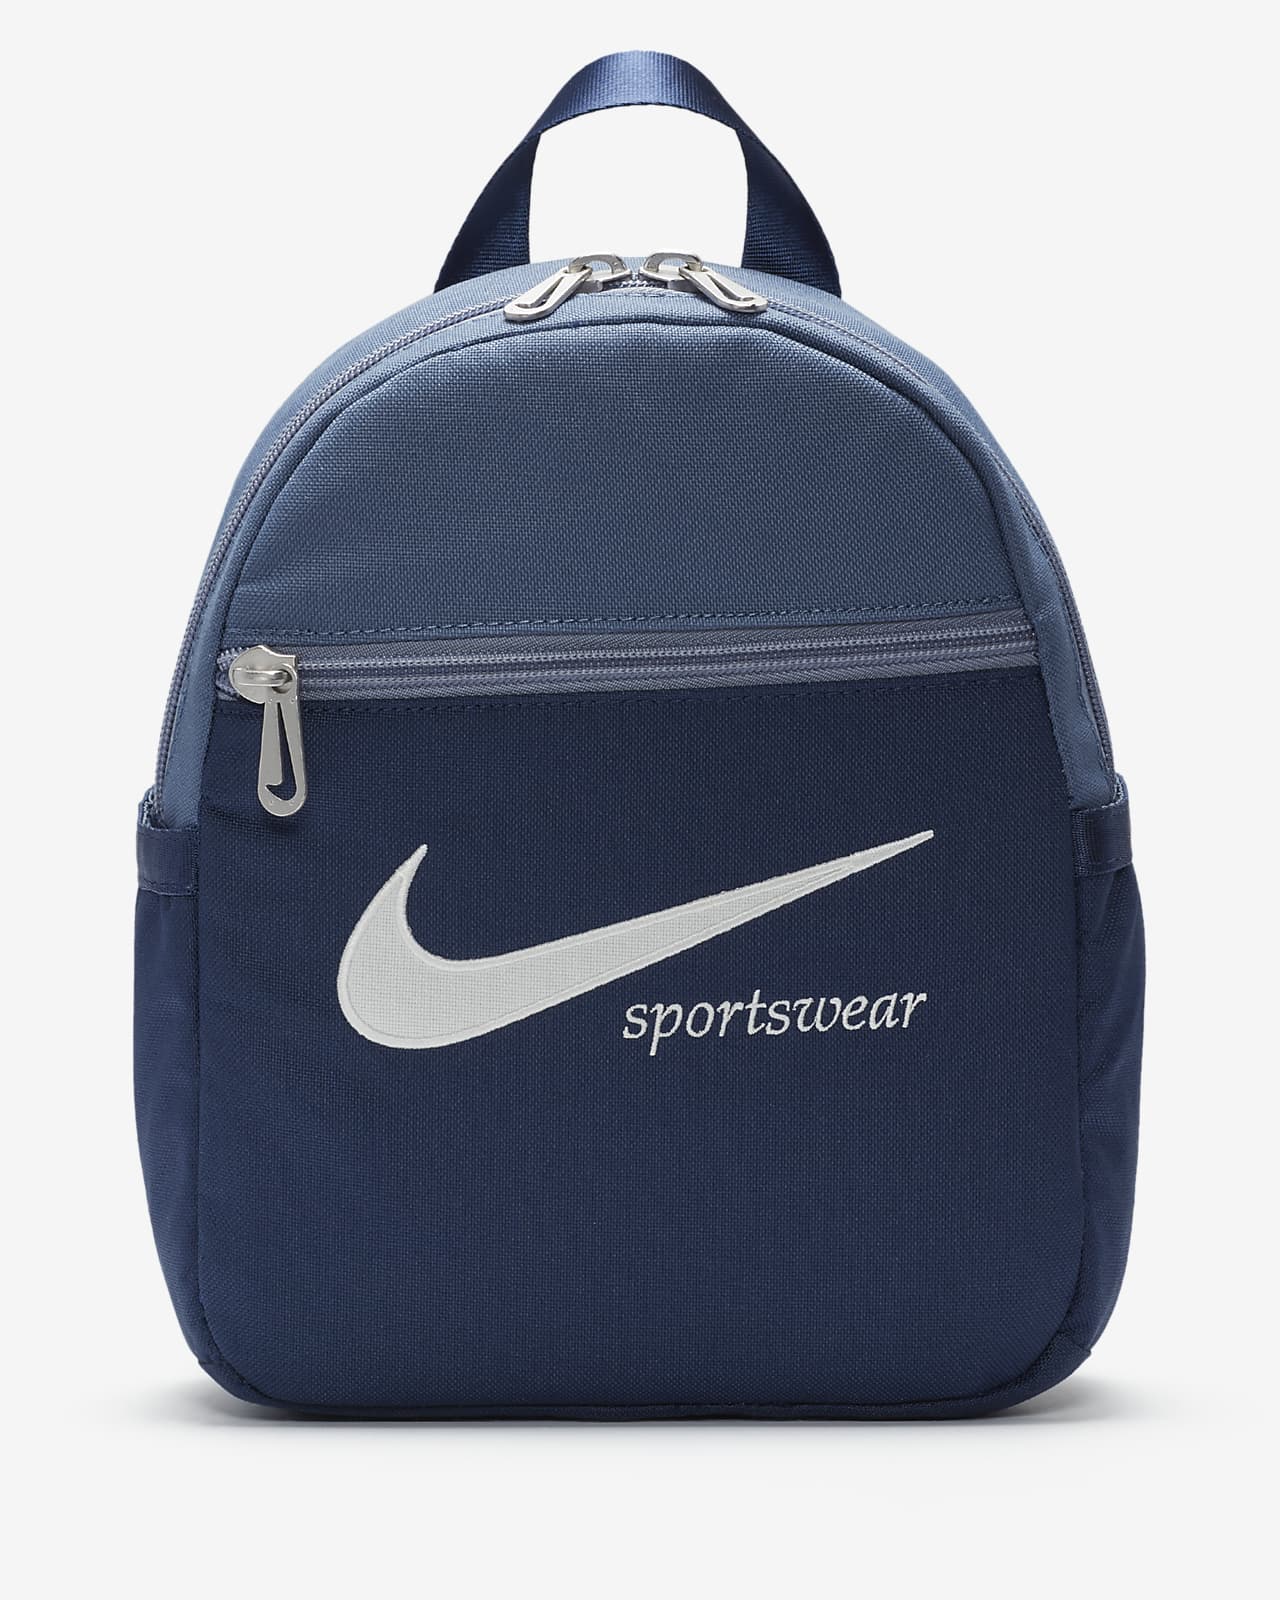 Lacoste Side Bag  SportsDirect.com USA